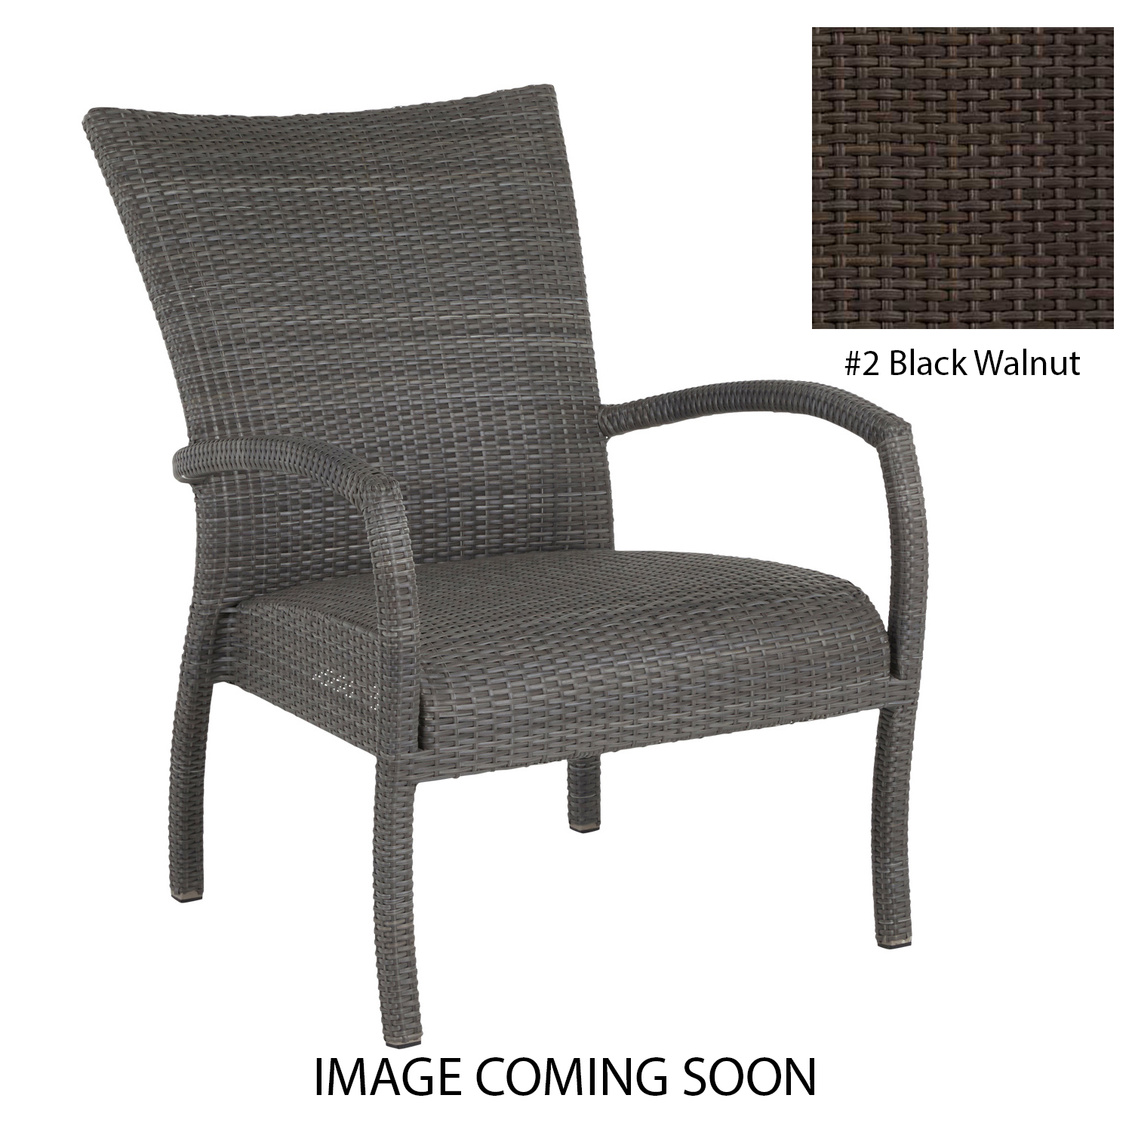 skye plus woven lounge in black walnut product image